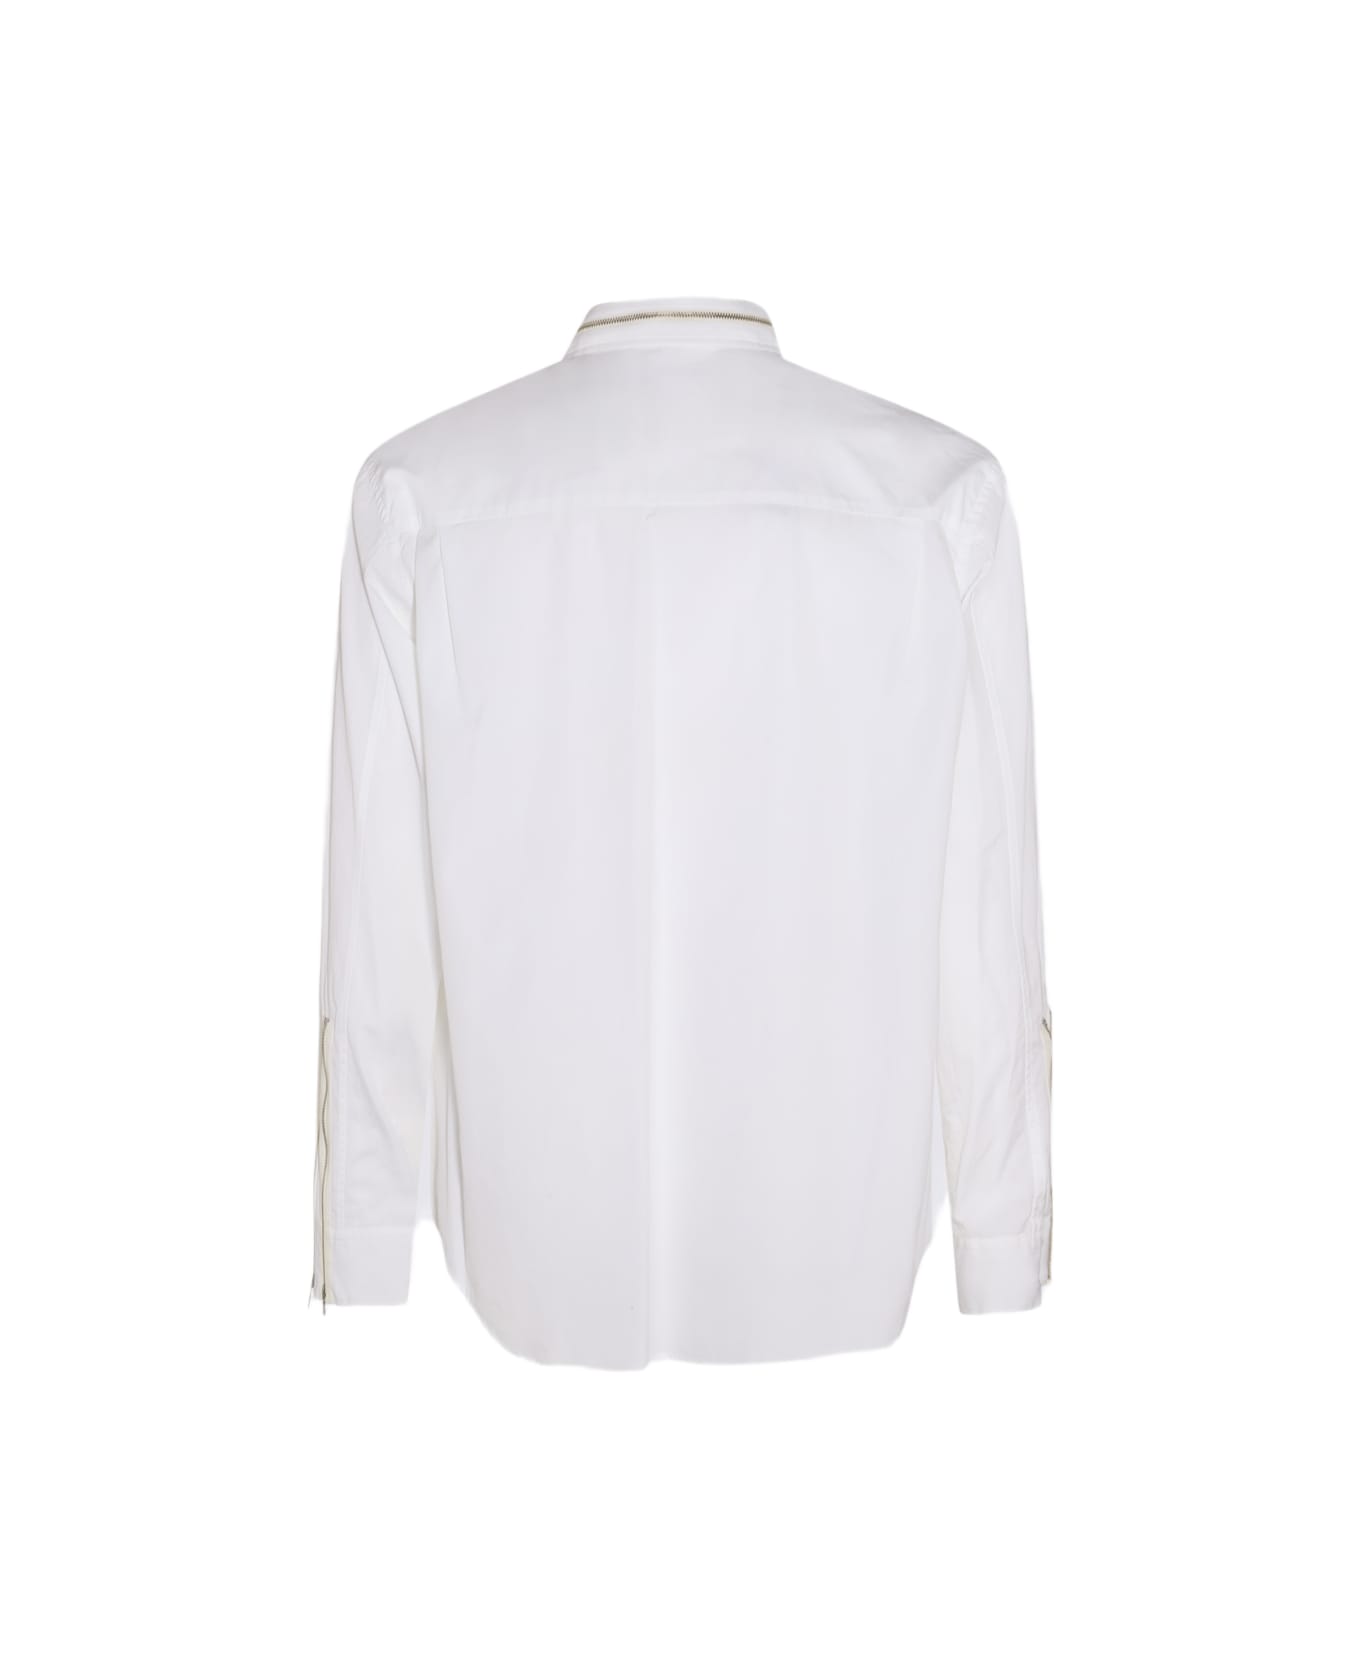 Undercover Jun Takahashi White Cotton Shirt